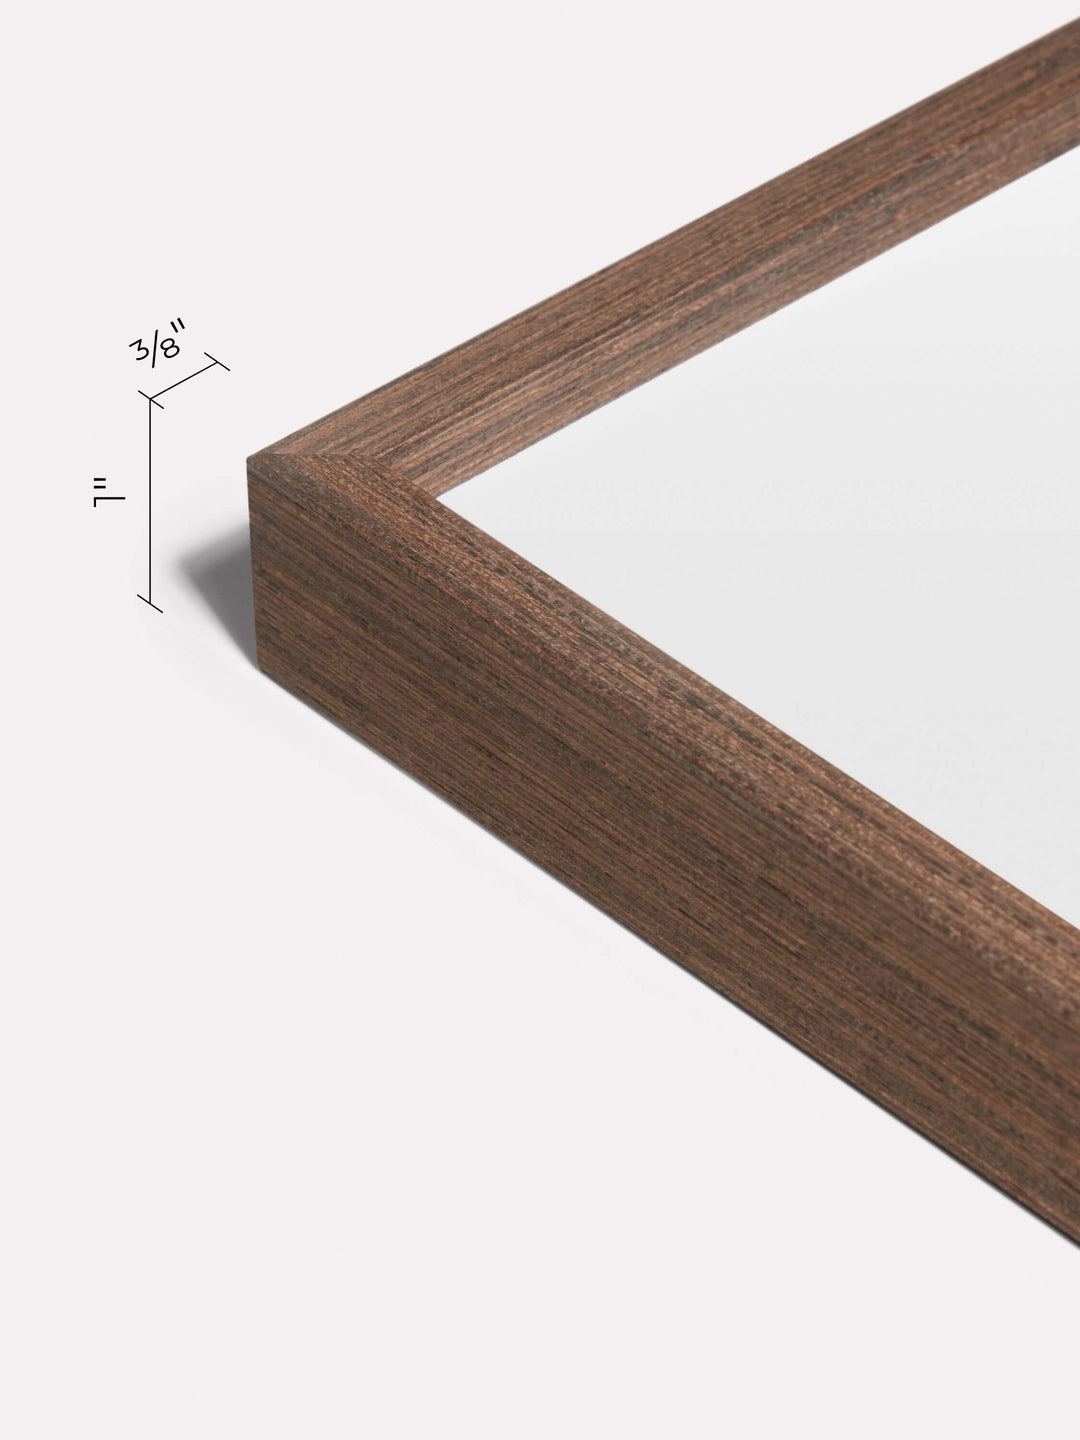 16x20-inch Thin Frame, Walnut - Close-up view